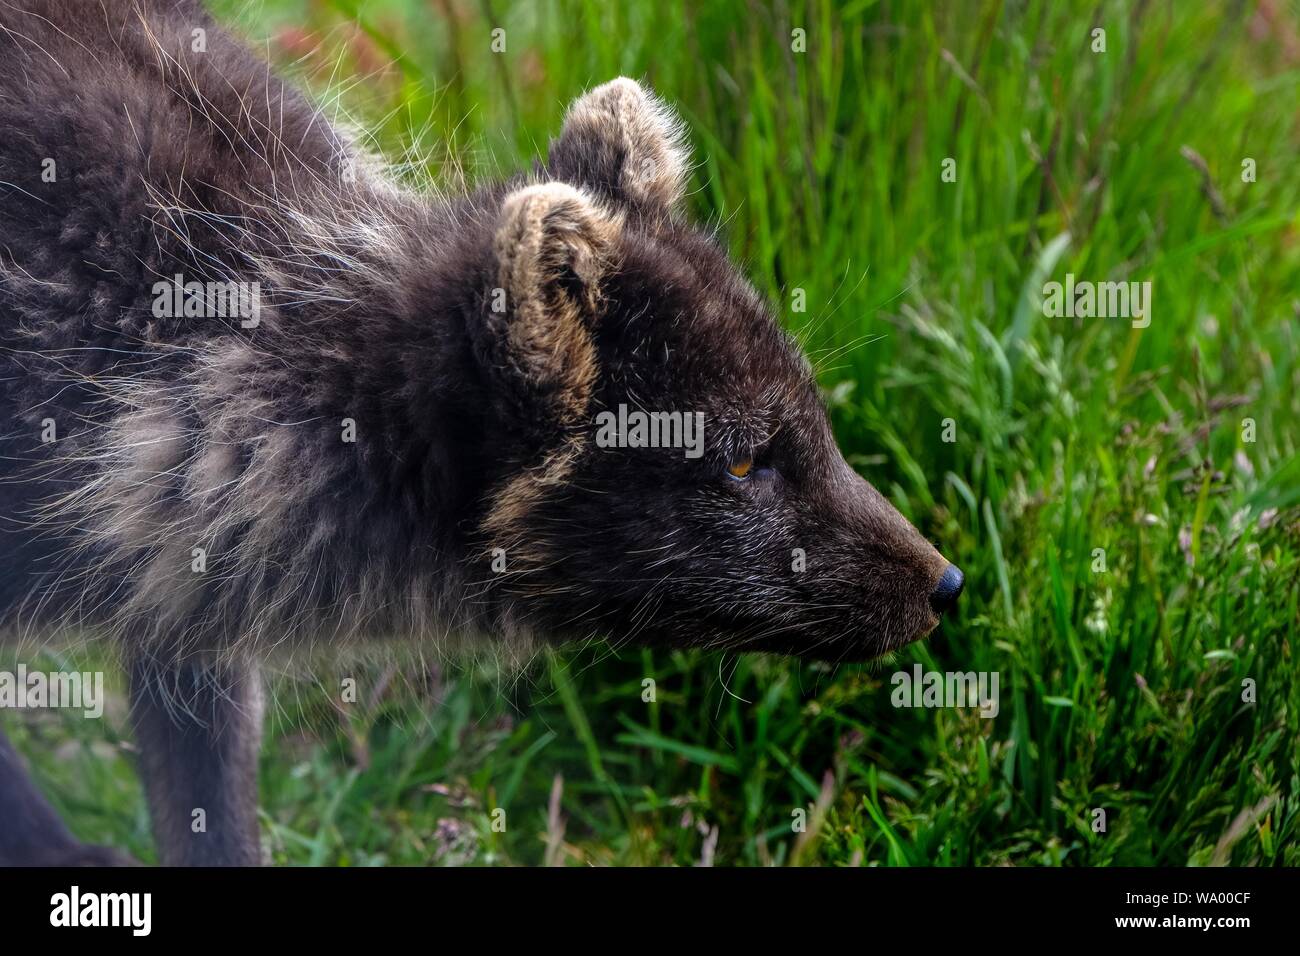 Closeup shot of Tasmanian devil marsupial in a grass field Stock Photo